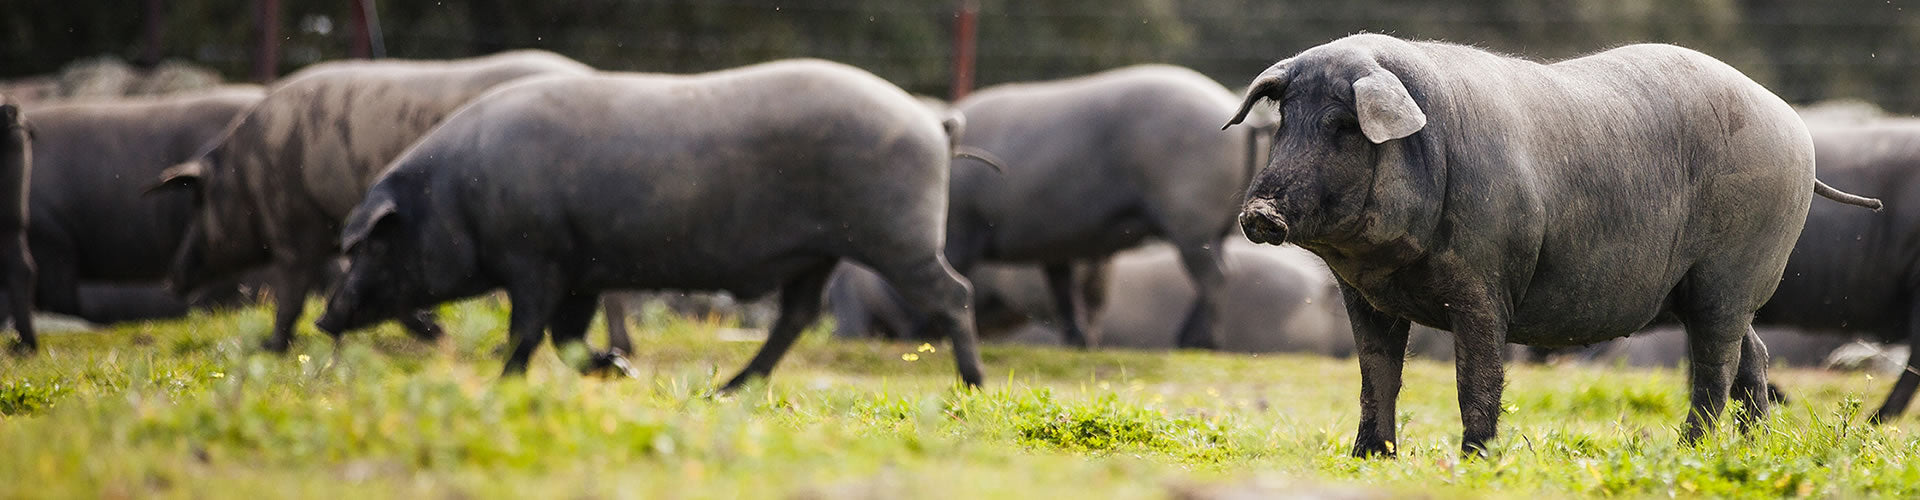 Iberian Pigs in a sunny field